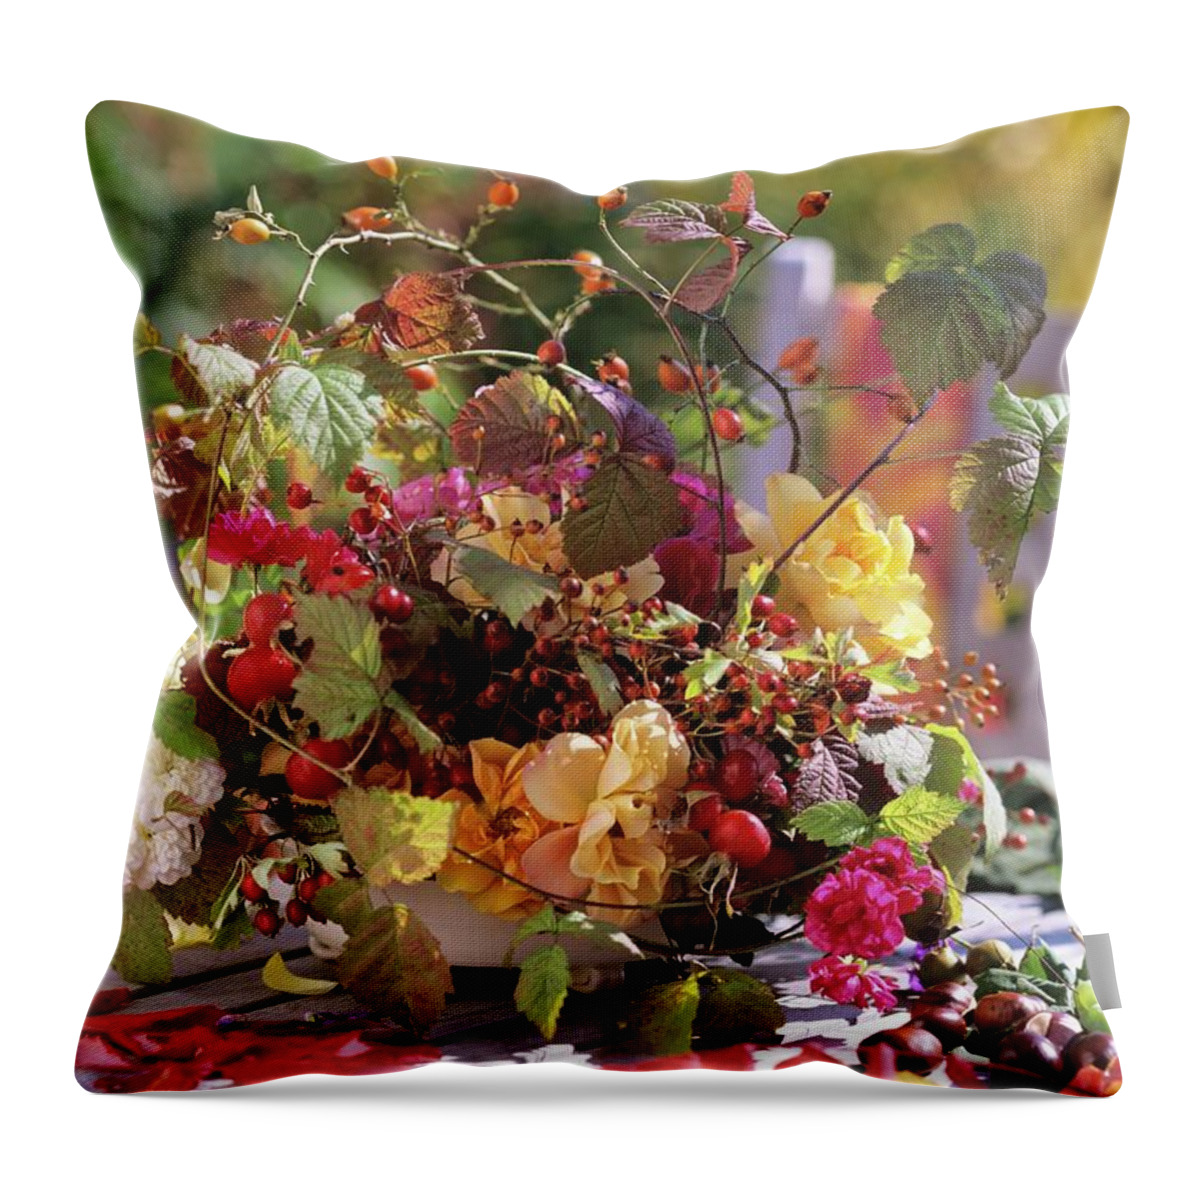 Ip_00272284 Throw Pillow featuring the photograph Autumn Arrangement: Bowl With Florist's Foam, Roses, Rose Hips by Friedrich Strauss